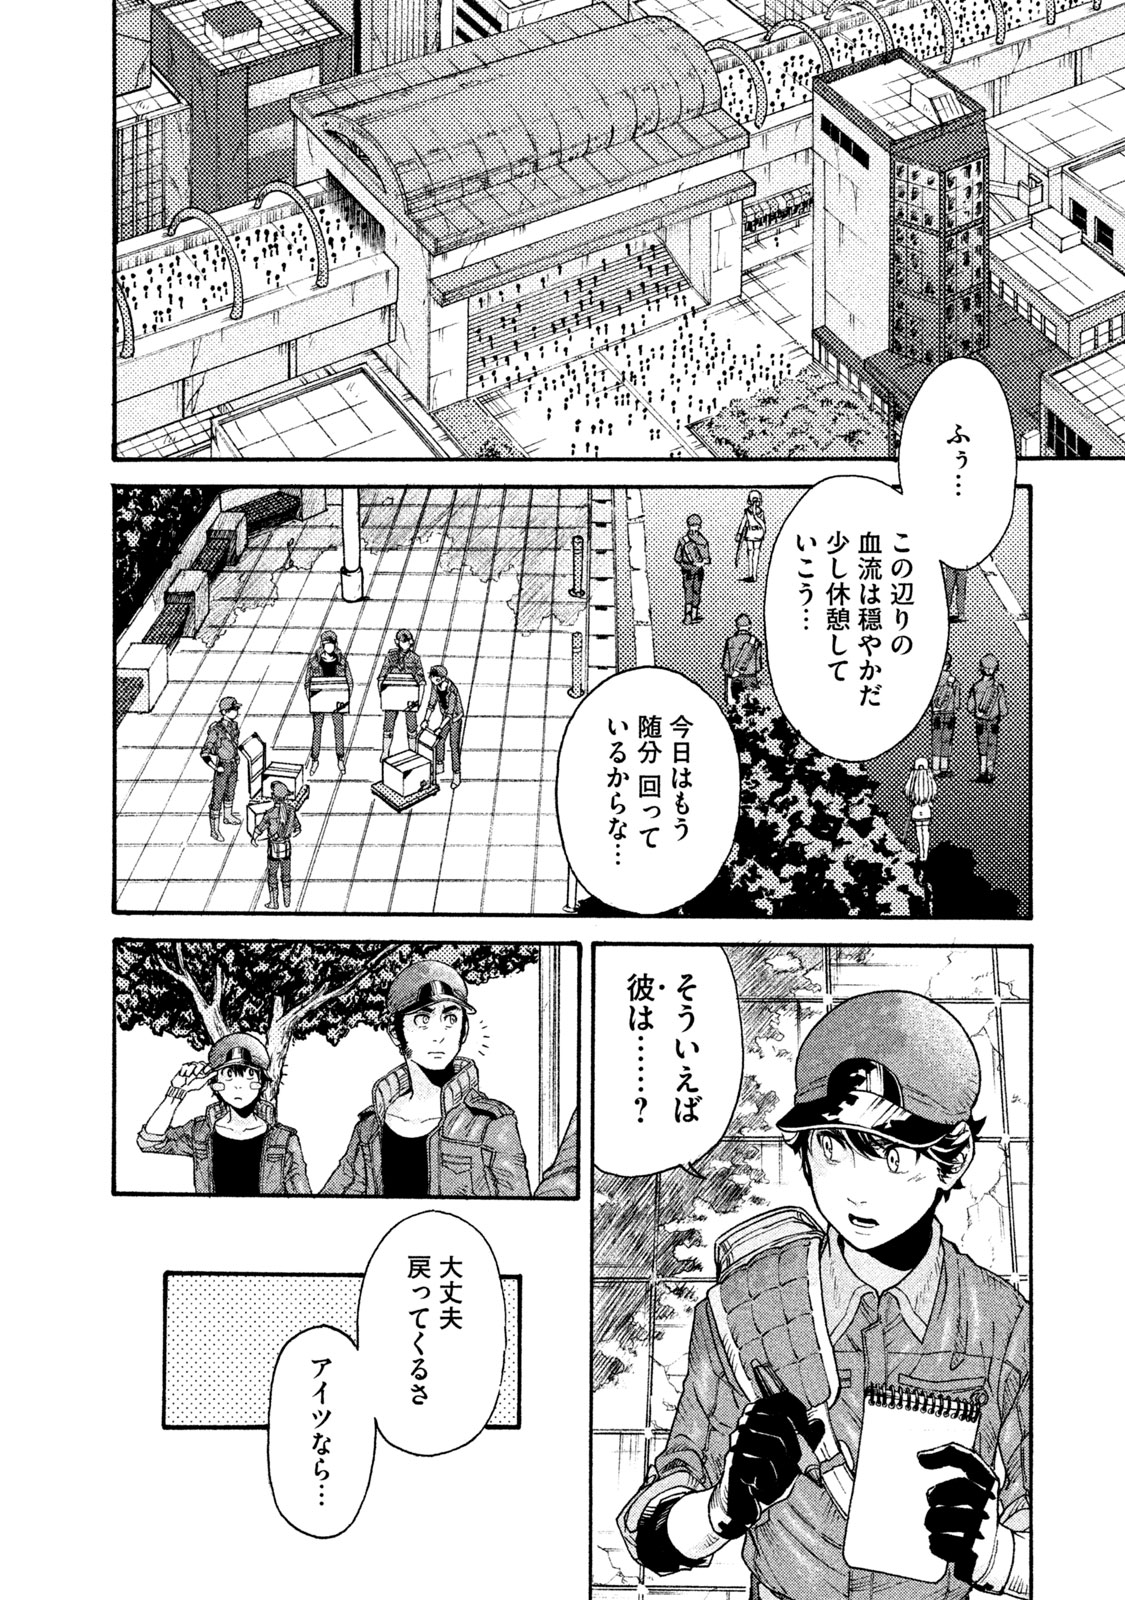 Hataraku Saibou BLACK - Chapter 20 - Page 2